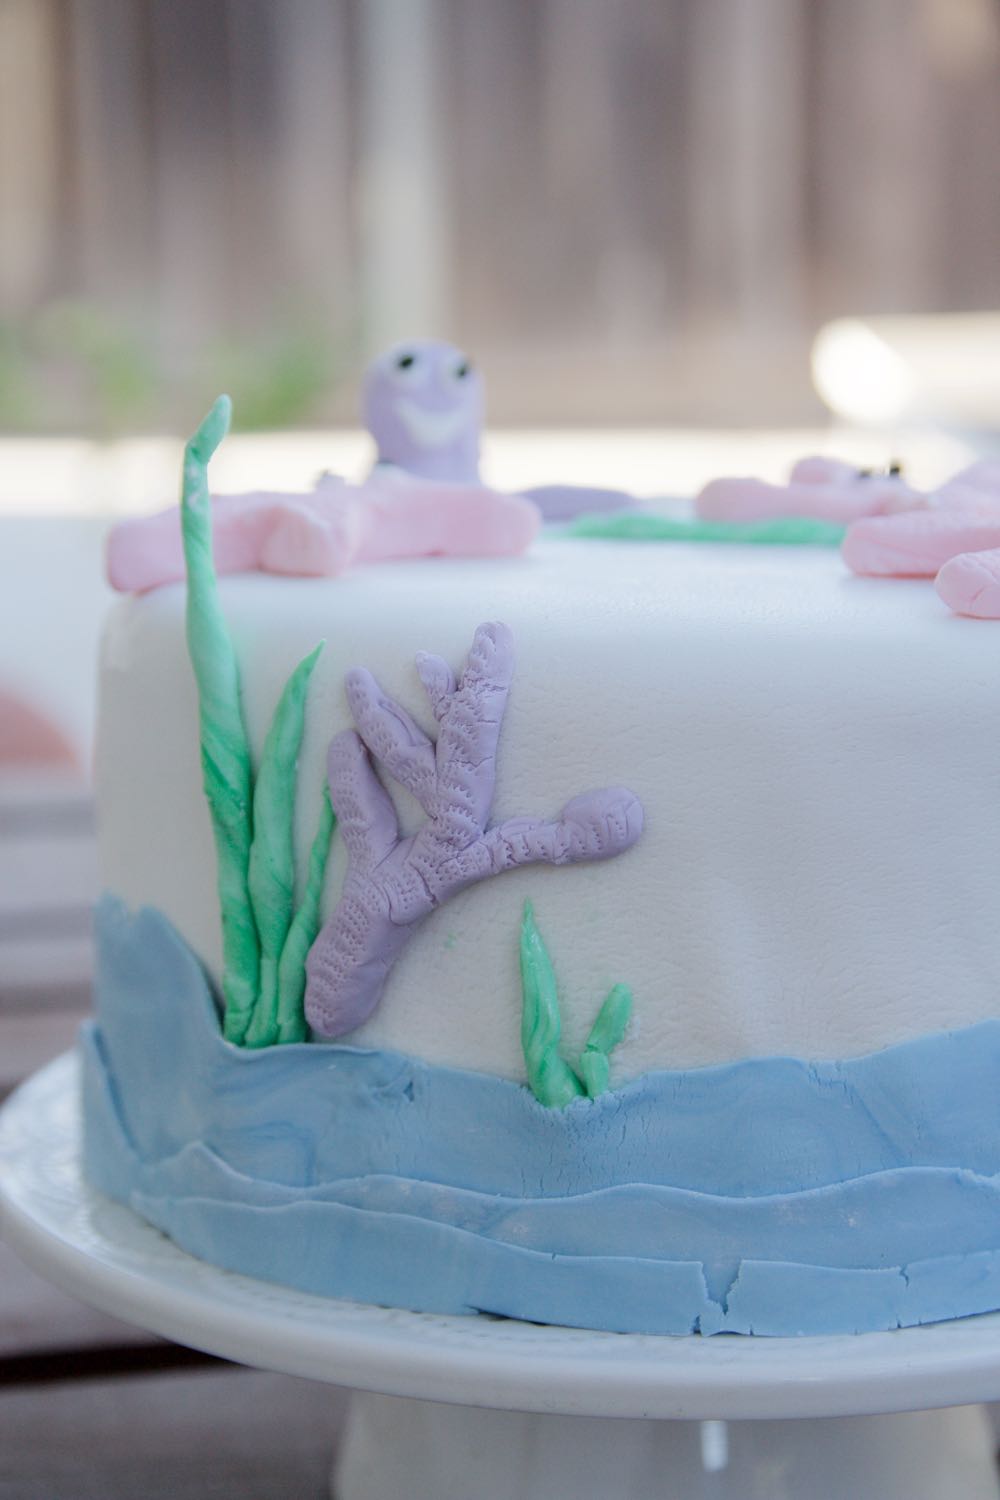 how to make a seashore themed fondant cake with sea creatures